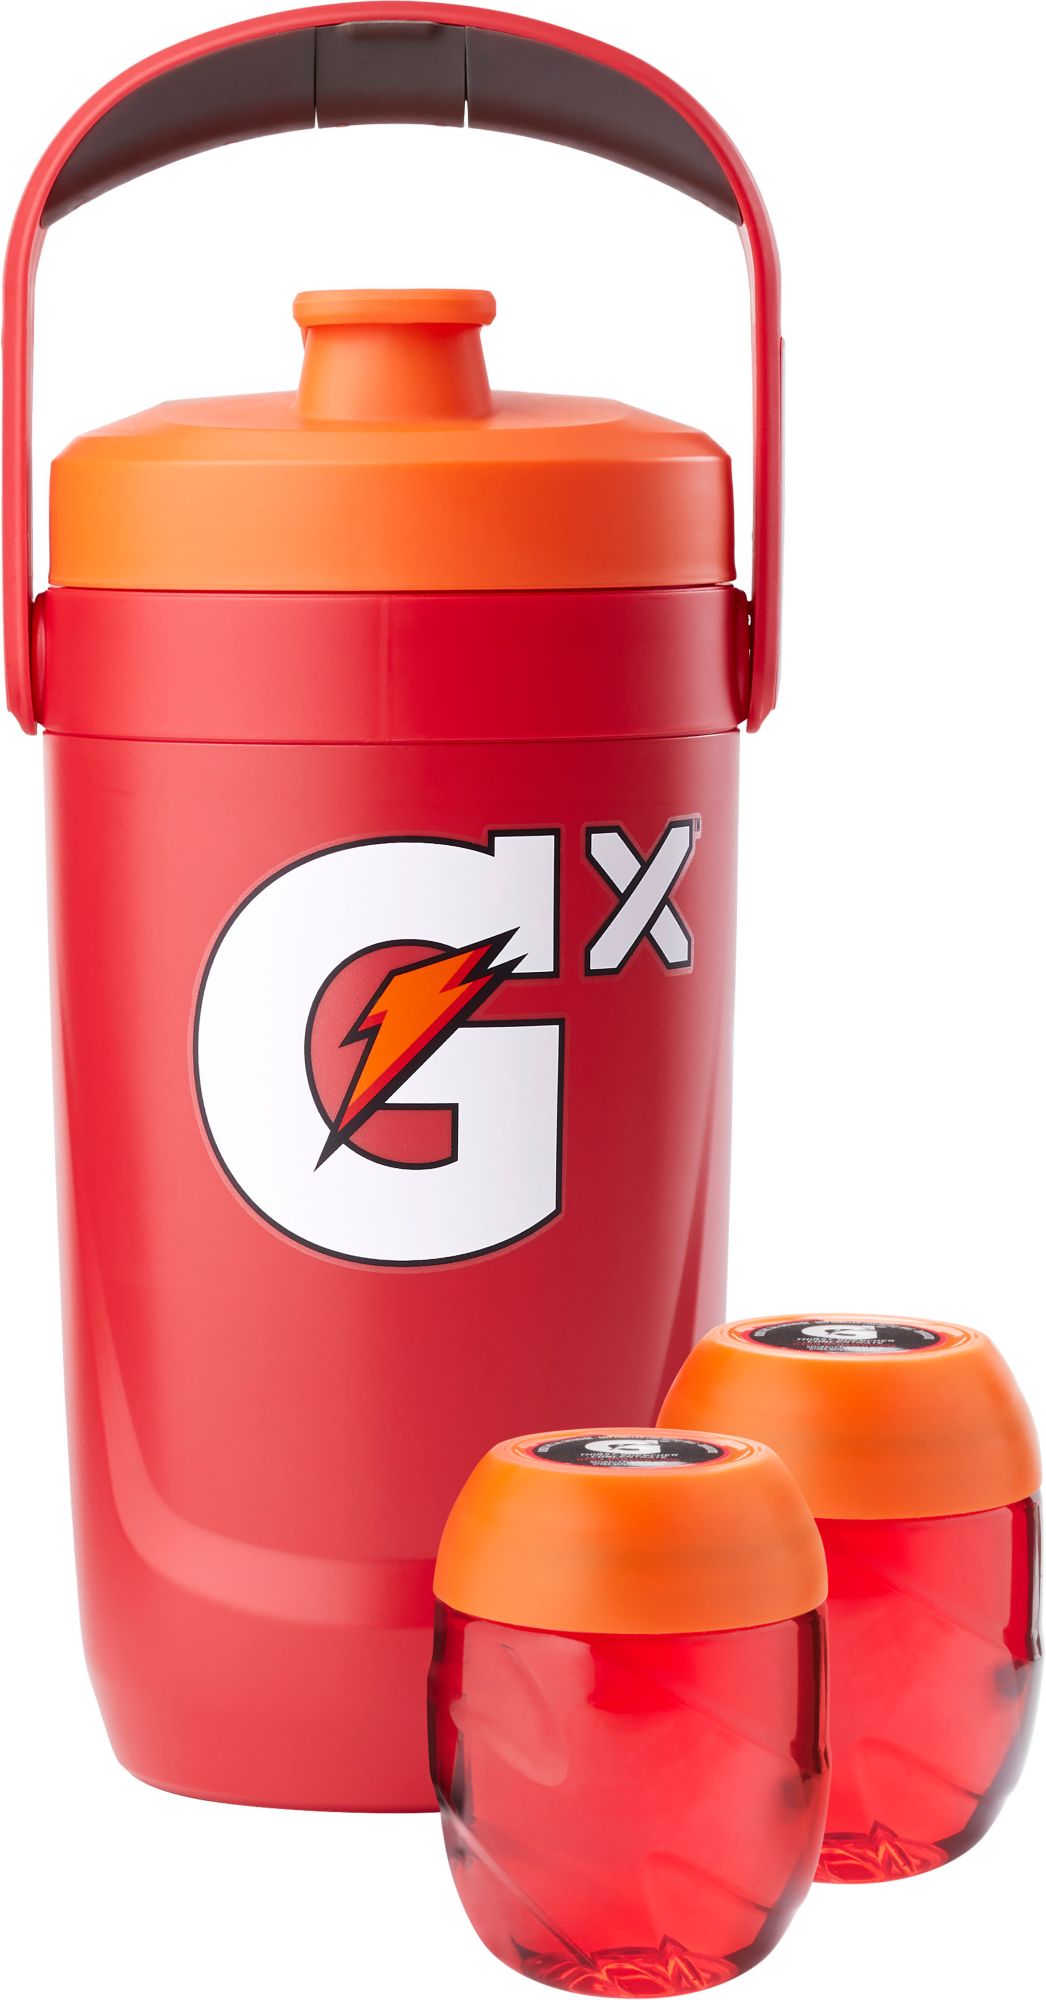 Gatorade GX Performance 64oz. RED Color Jug. for sale online